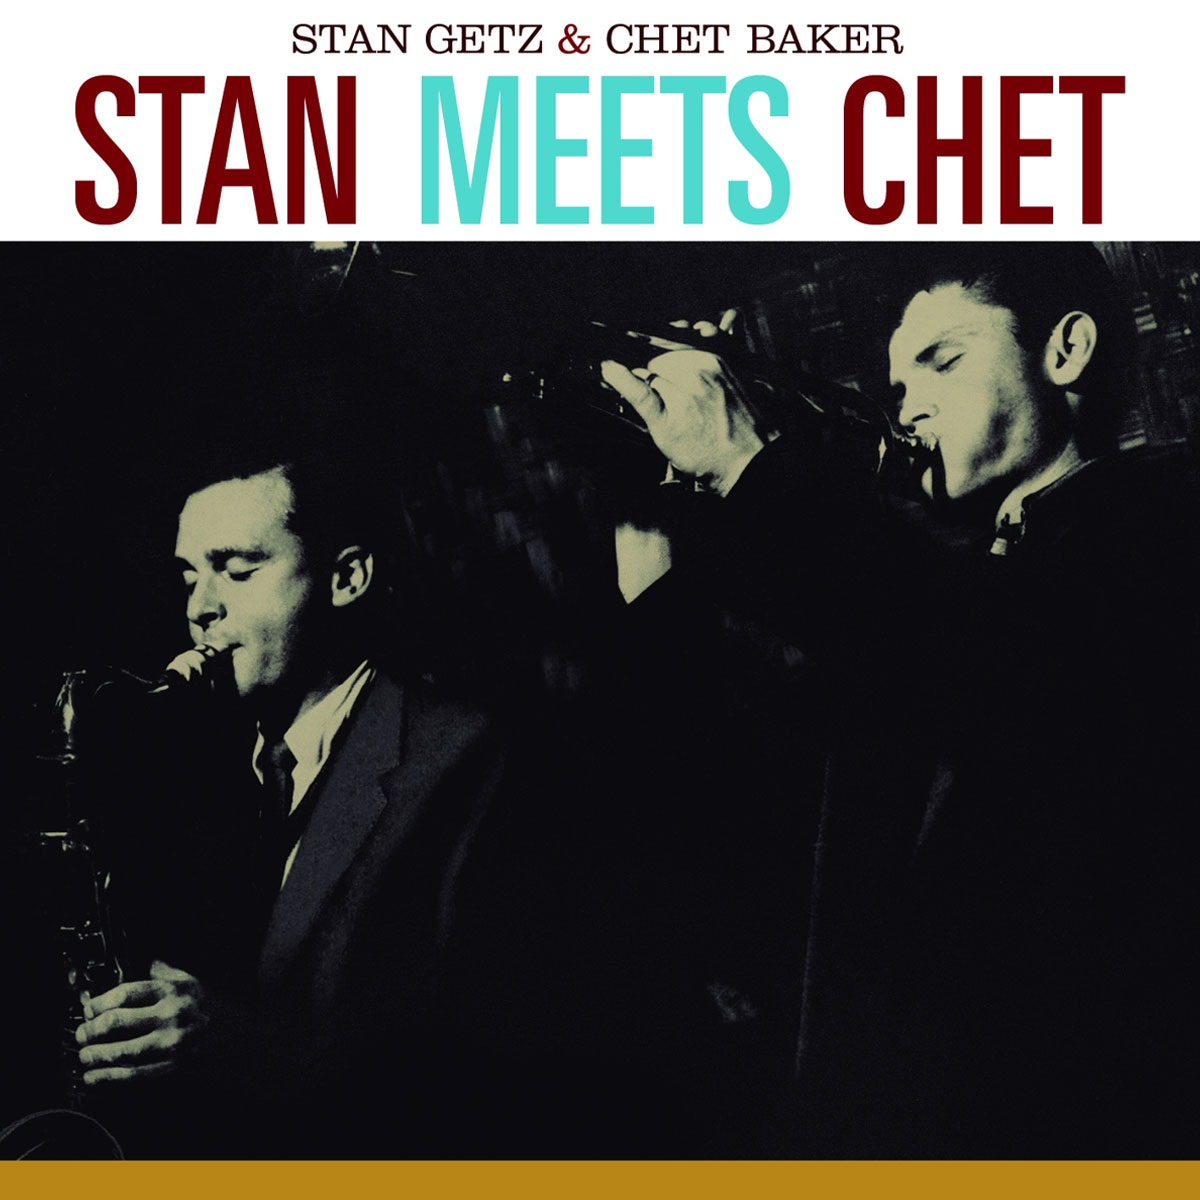 Stan Meets Chet + 2 Bonus Tracks